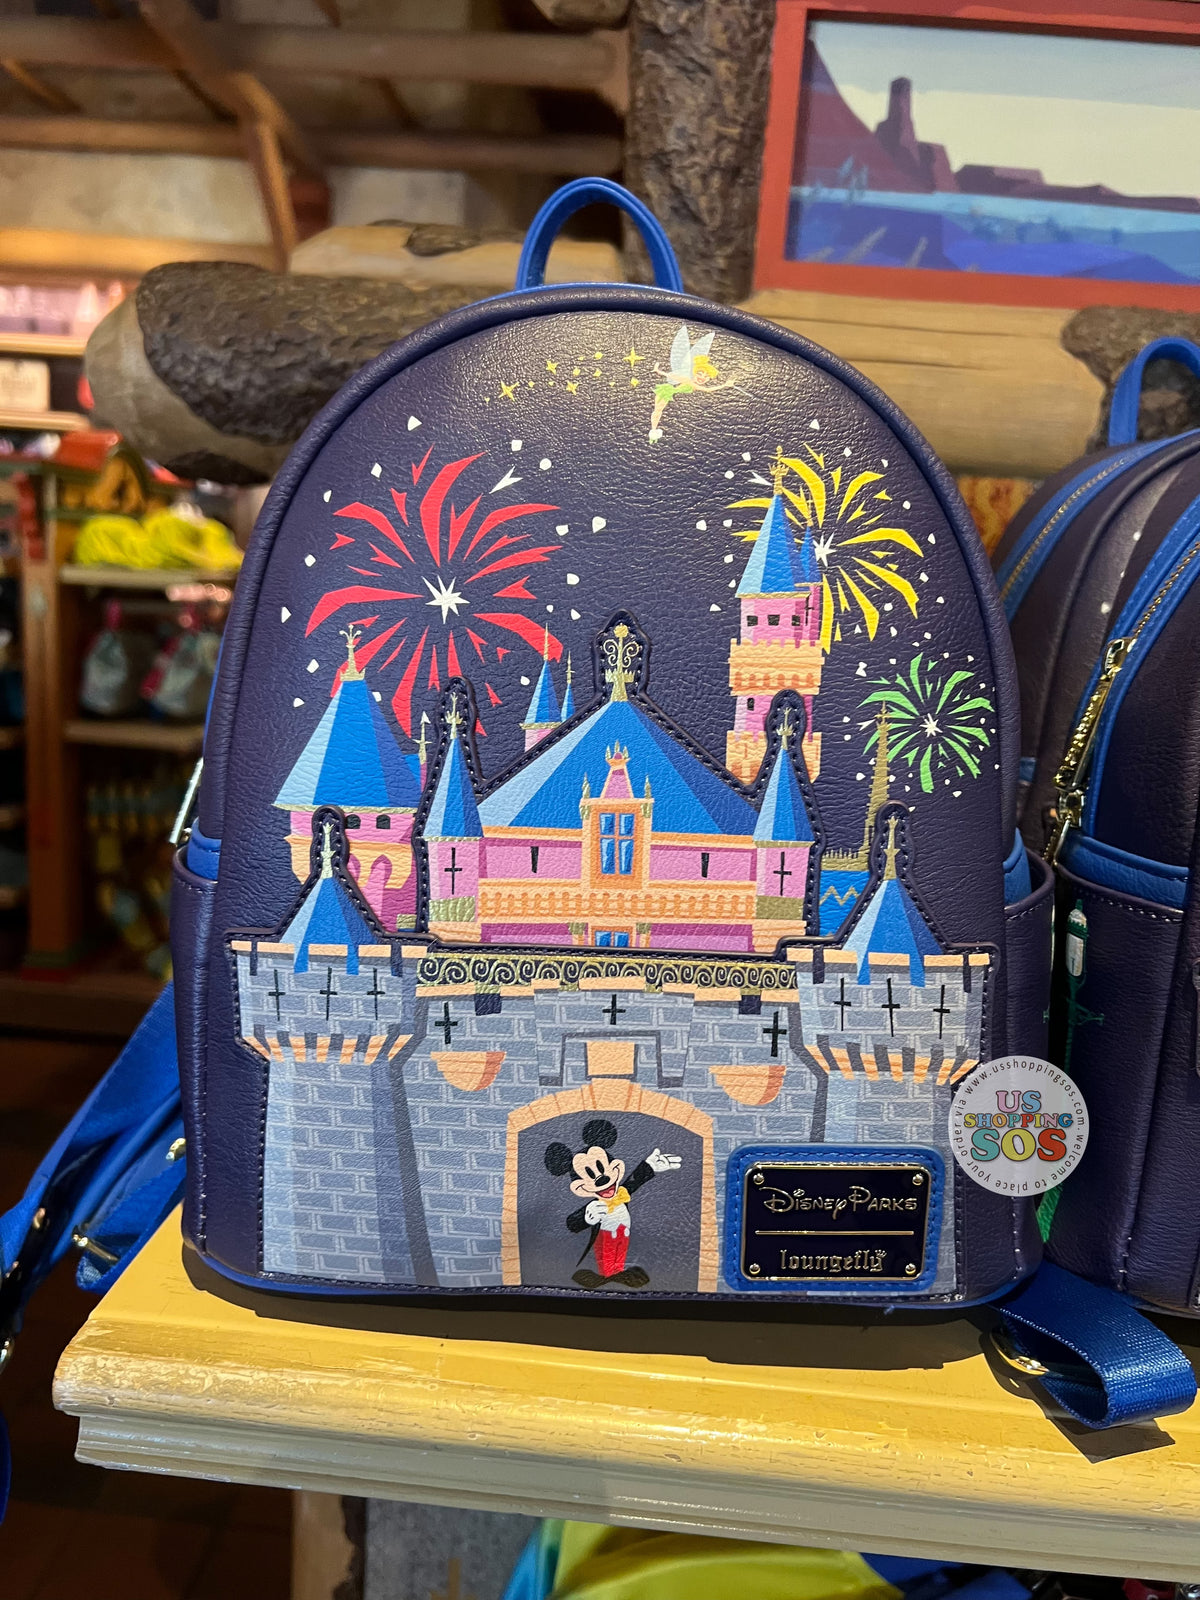 Loungefly Disney Sleeping Beauty Castle Mini Backpack 